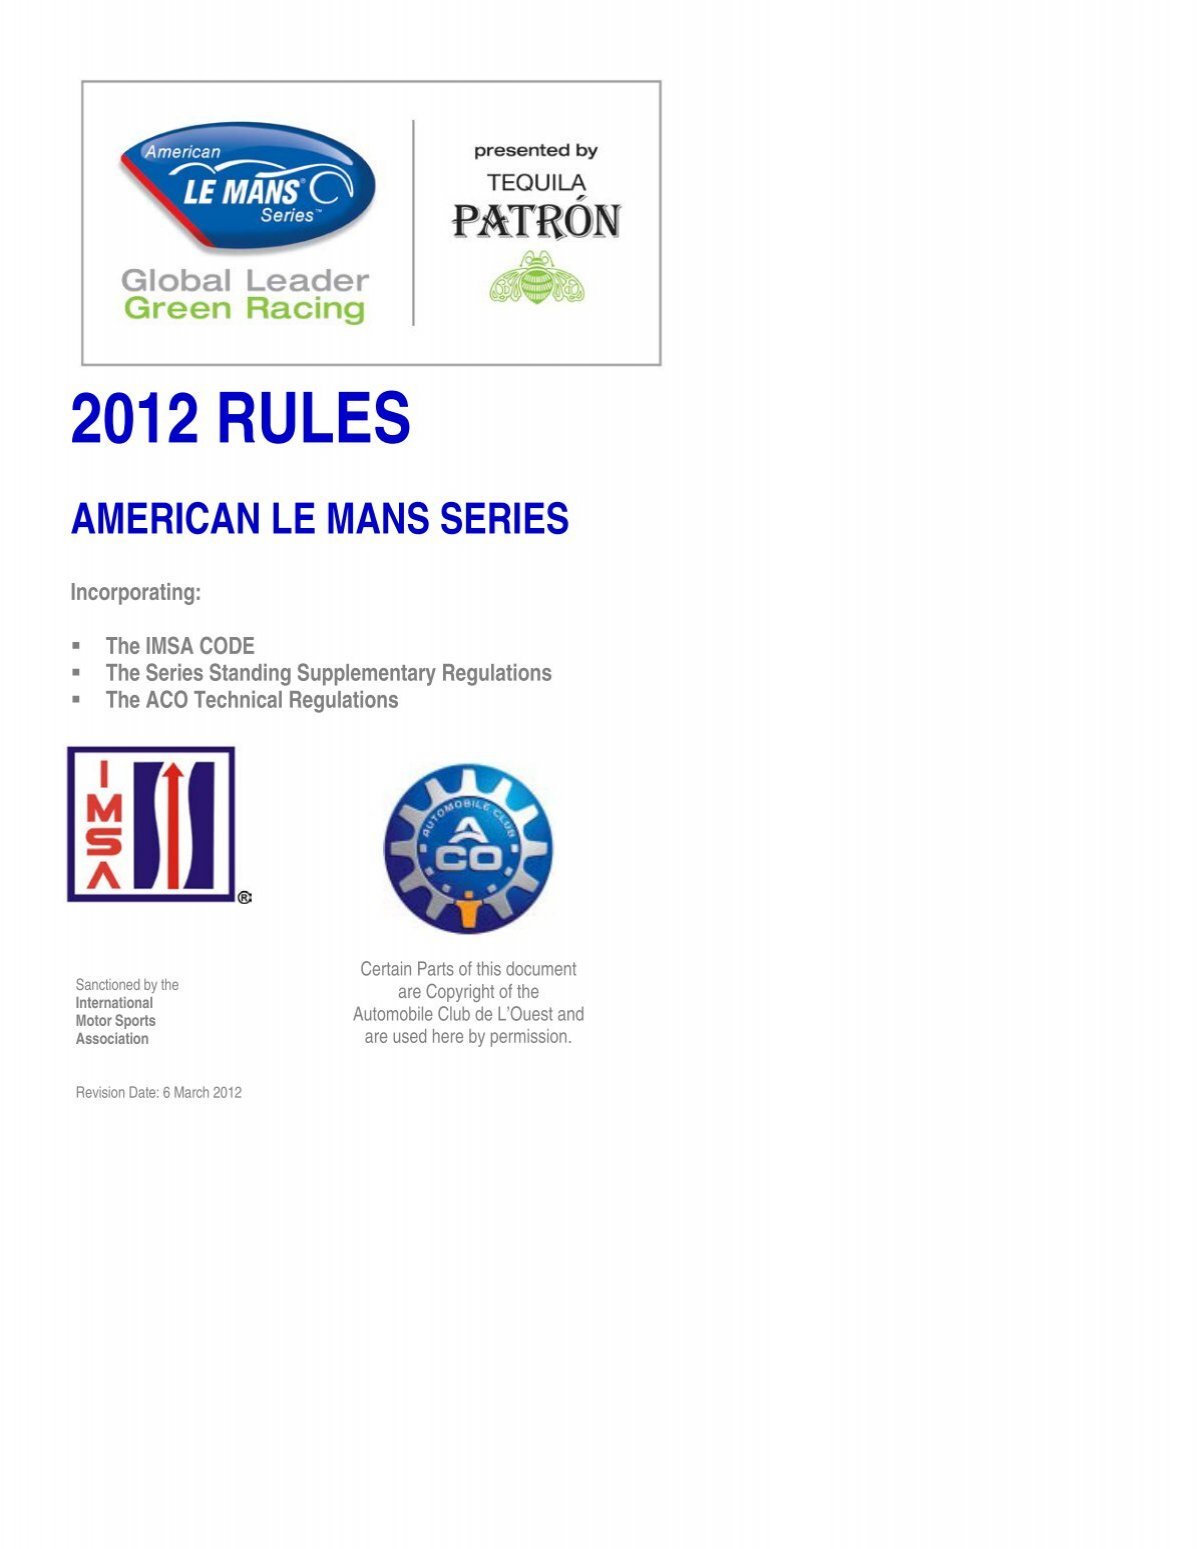 2012 RULES - the International Motor Sports Association